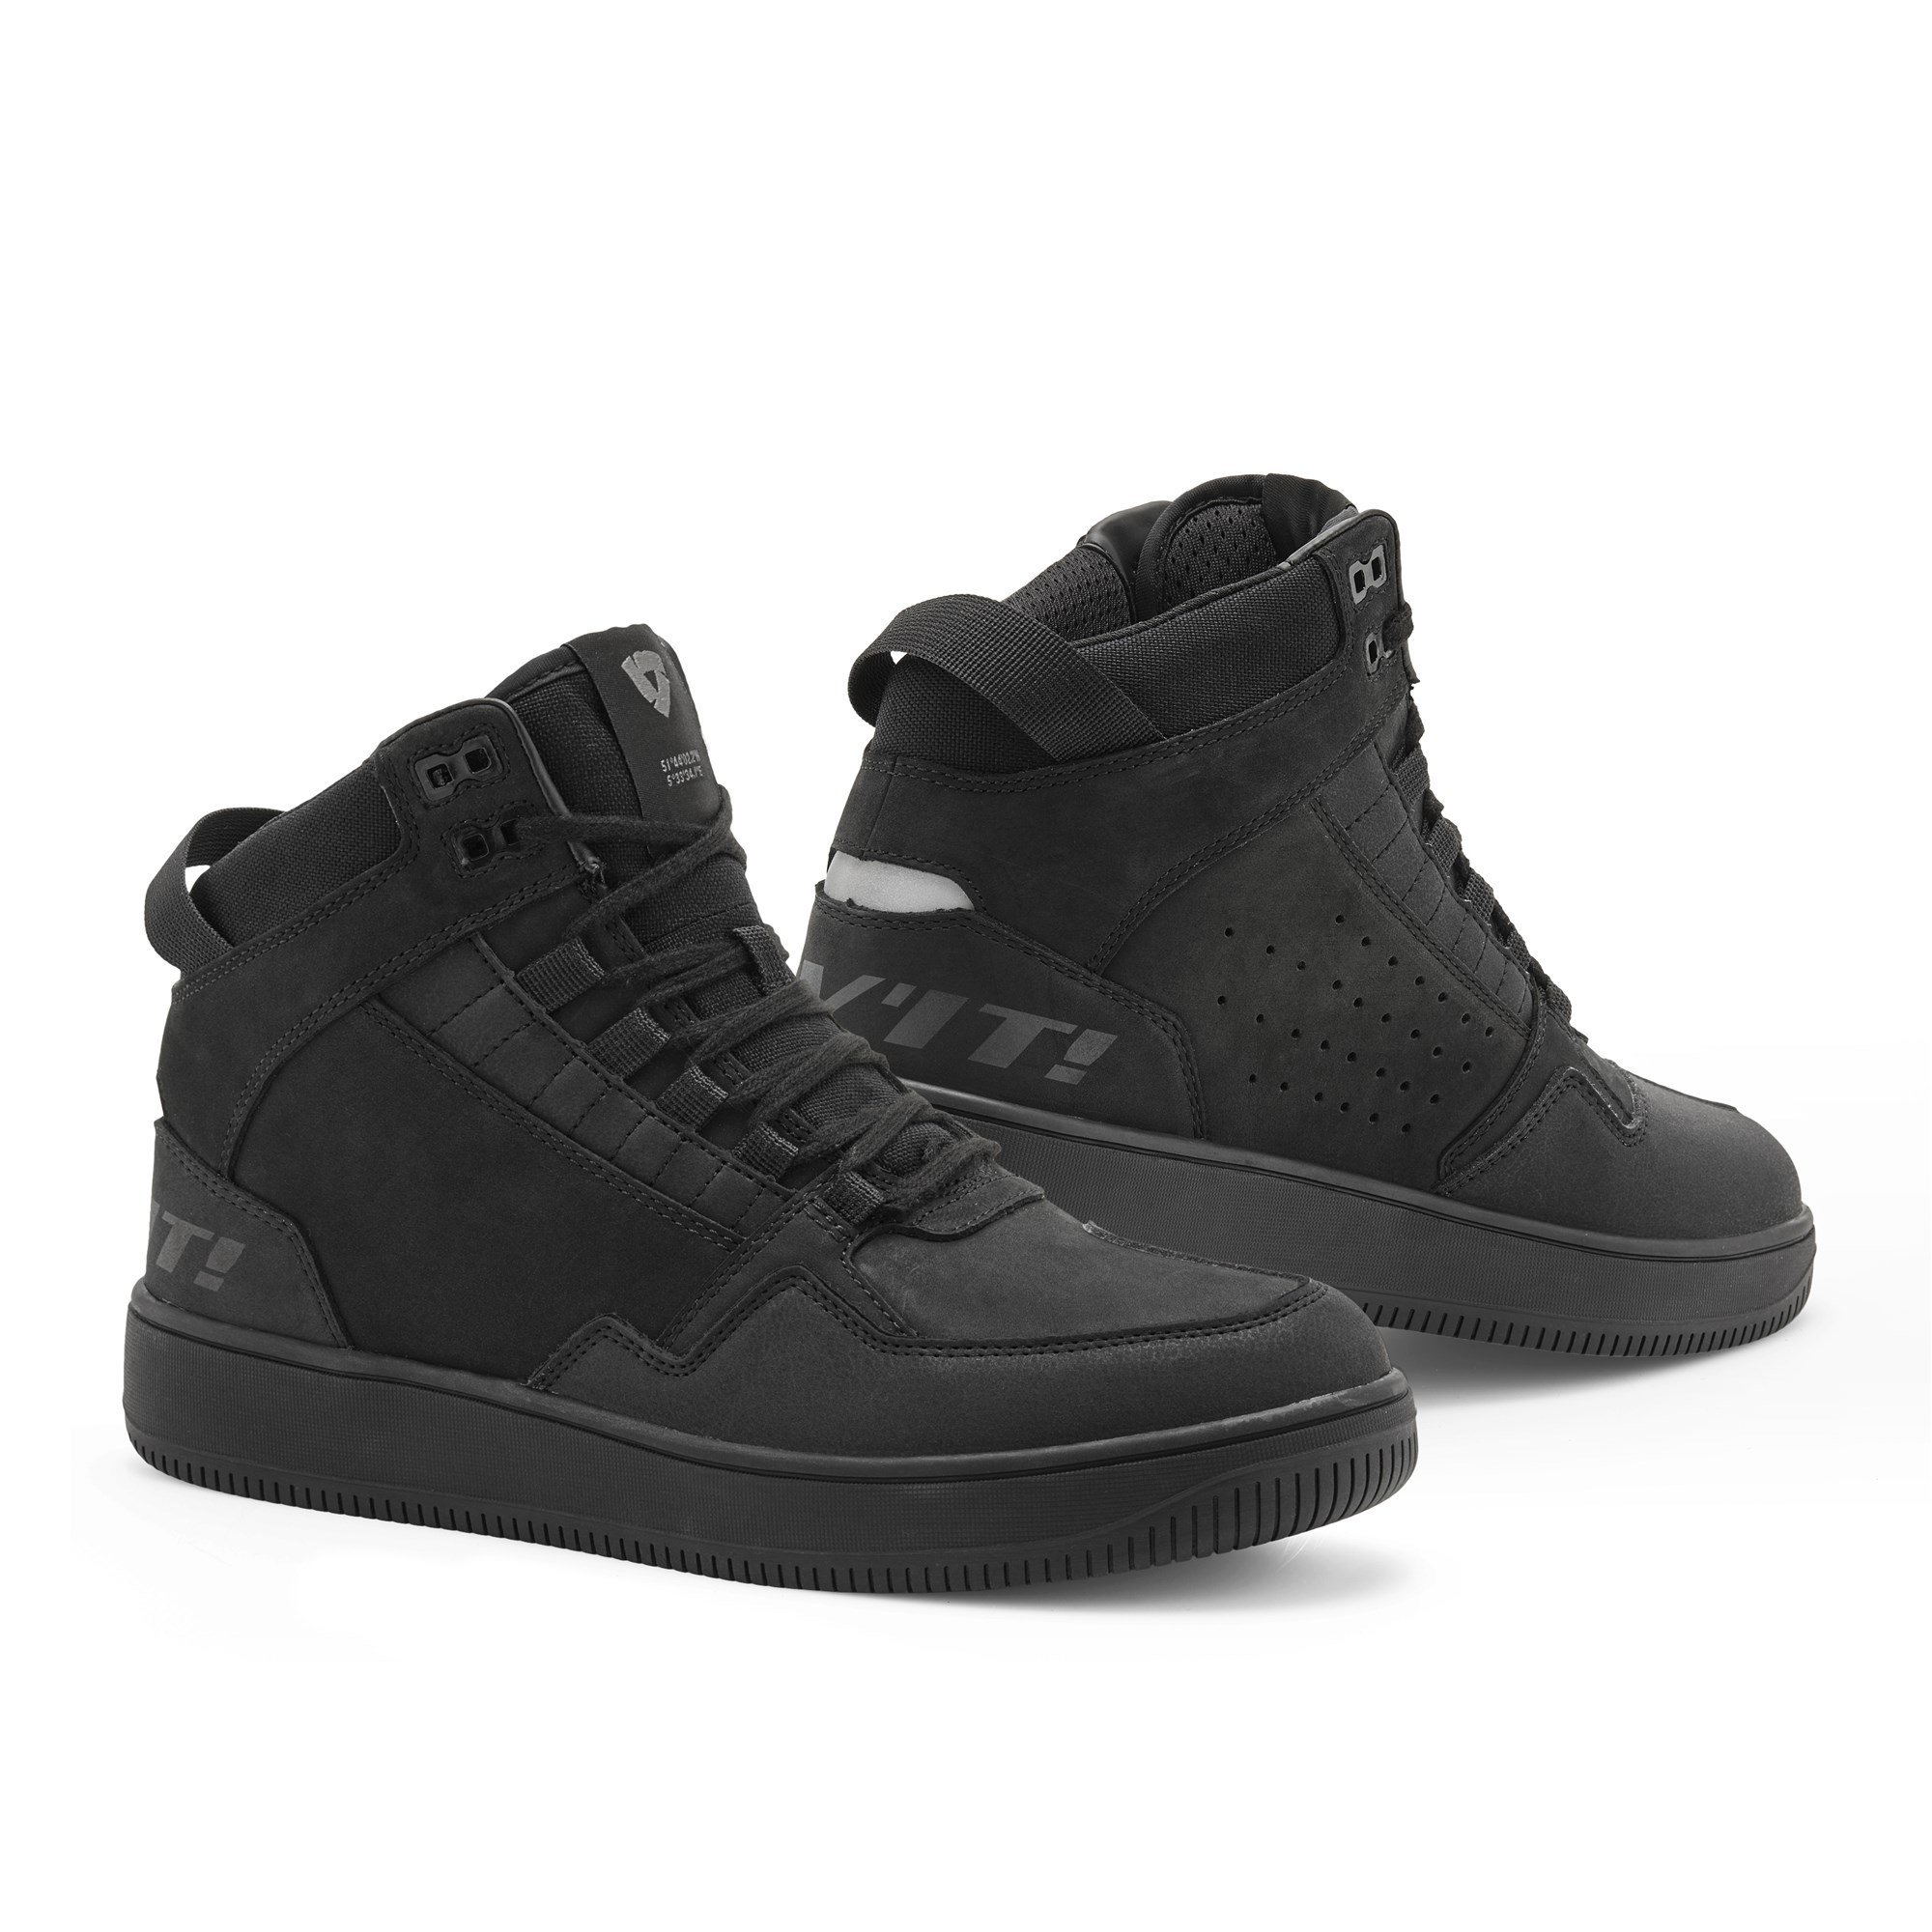 Image of REV'IT! Jefferson Shoes Black Size 39 ID 8700001282055